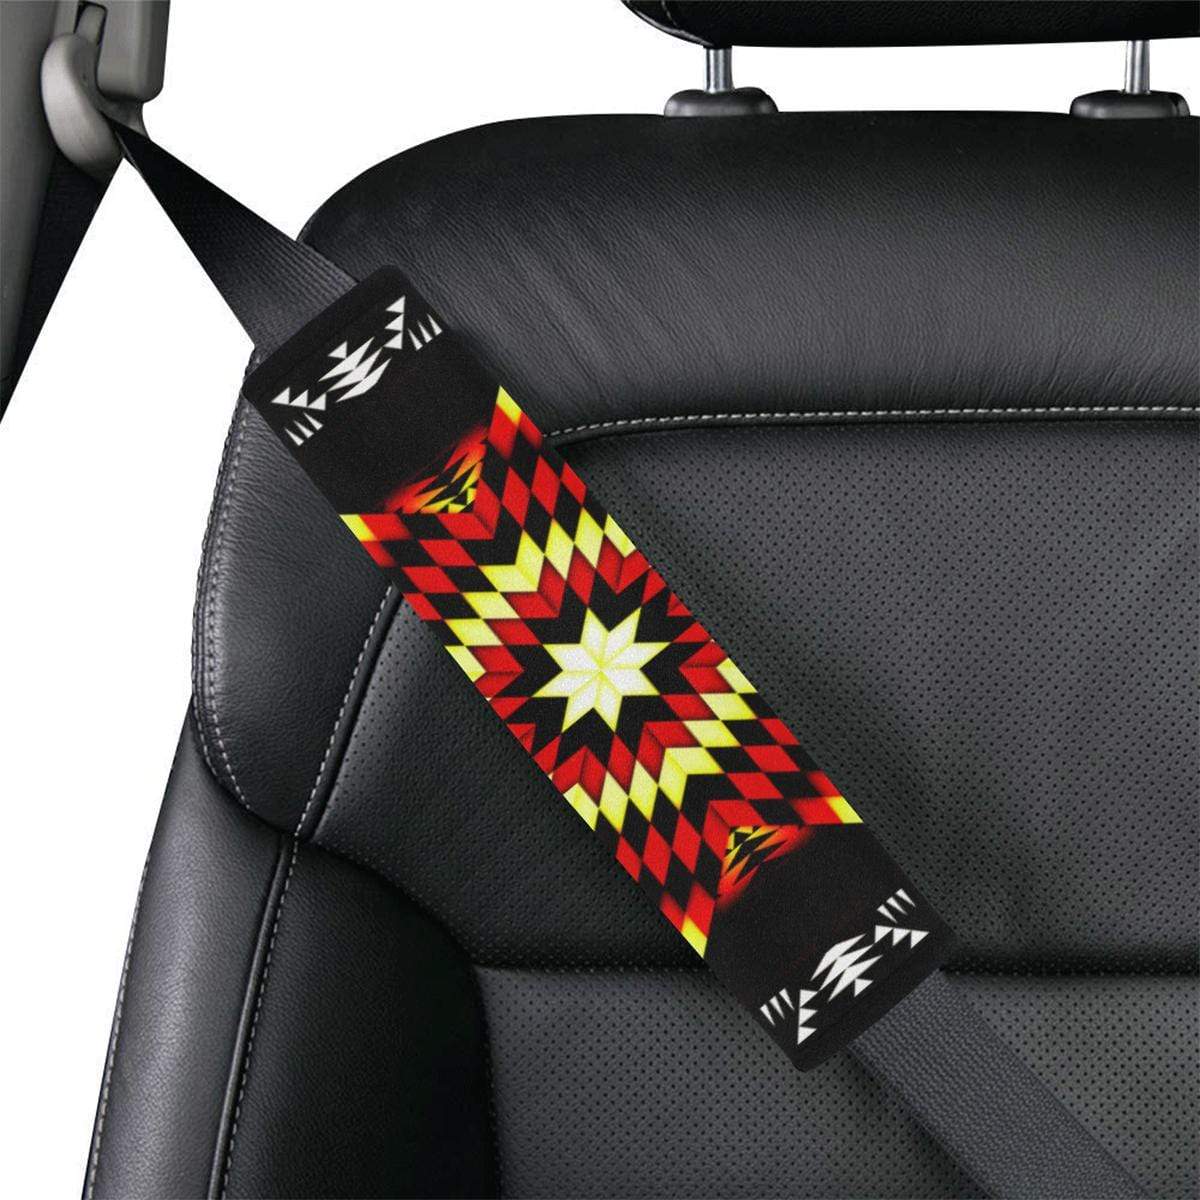 Fire Colors Car Seat Belt Cover 7''x12.6'' Car Seat Belt Cover 7''x12.6'' e-joyer 